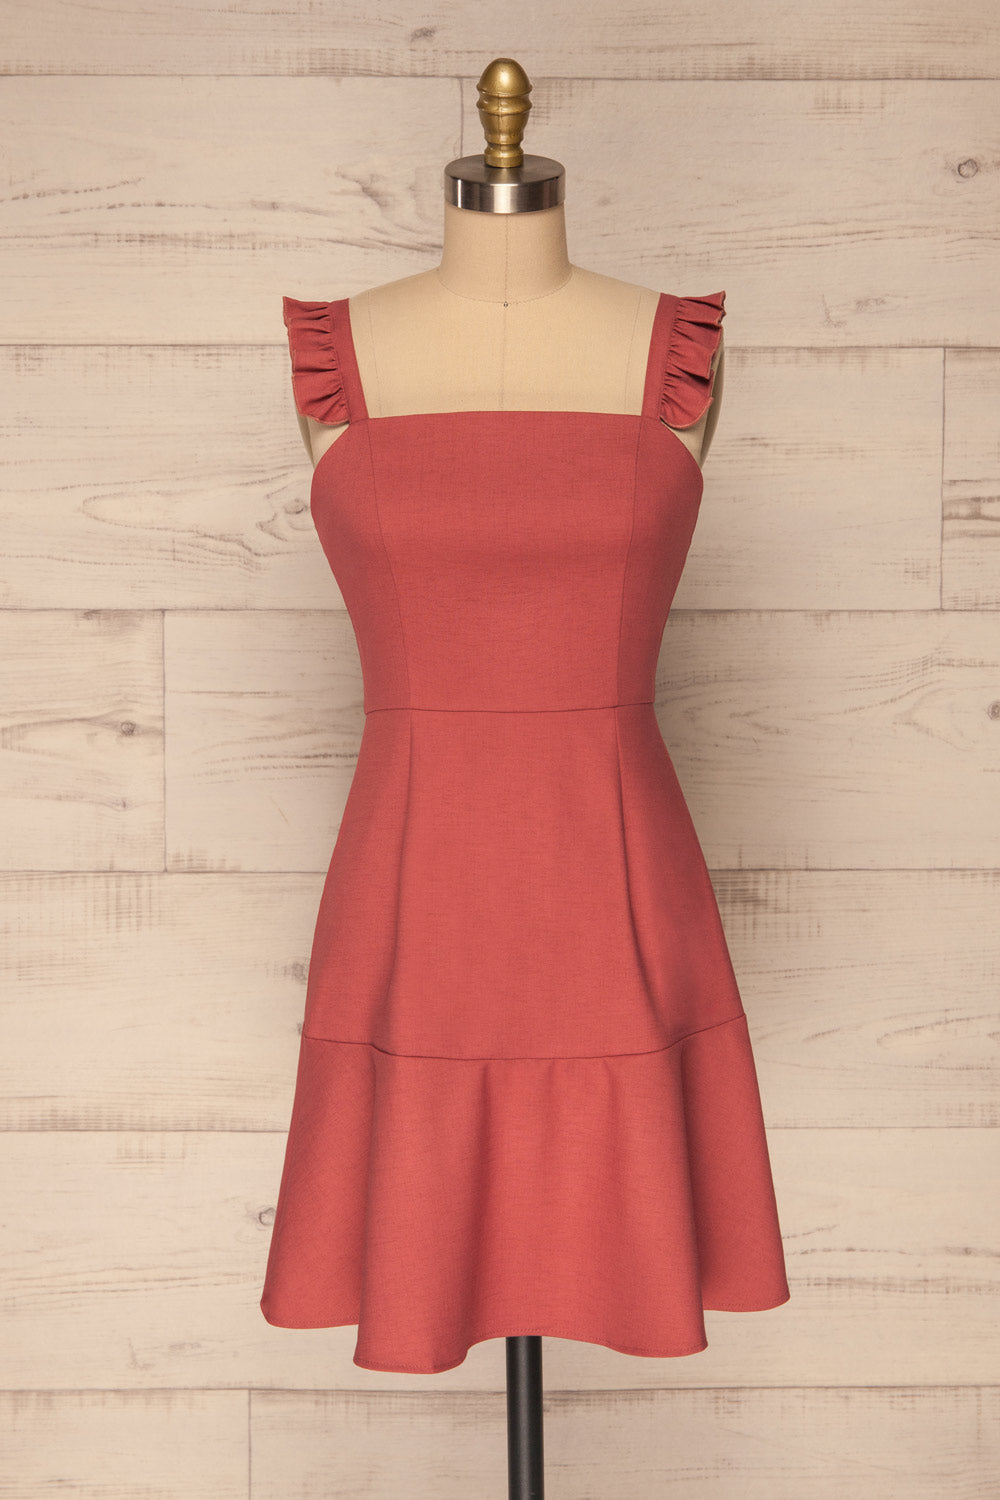 Carazon Pink A-Line Short Dress | La petite garçonne fabric